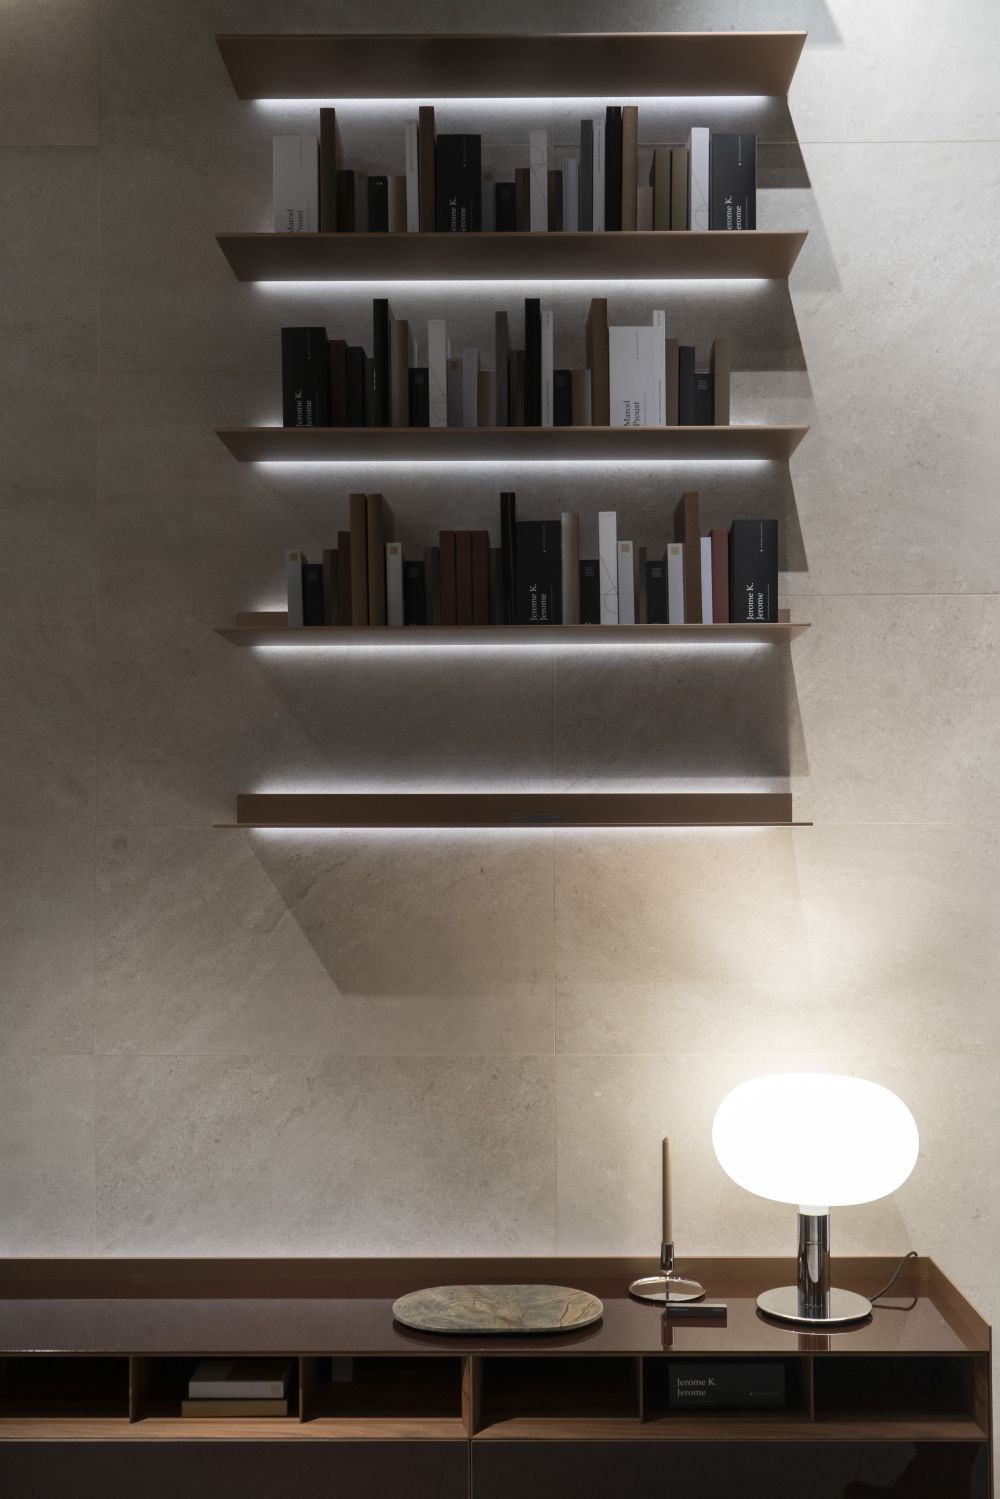 Use strategic lighting with shelves